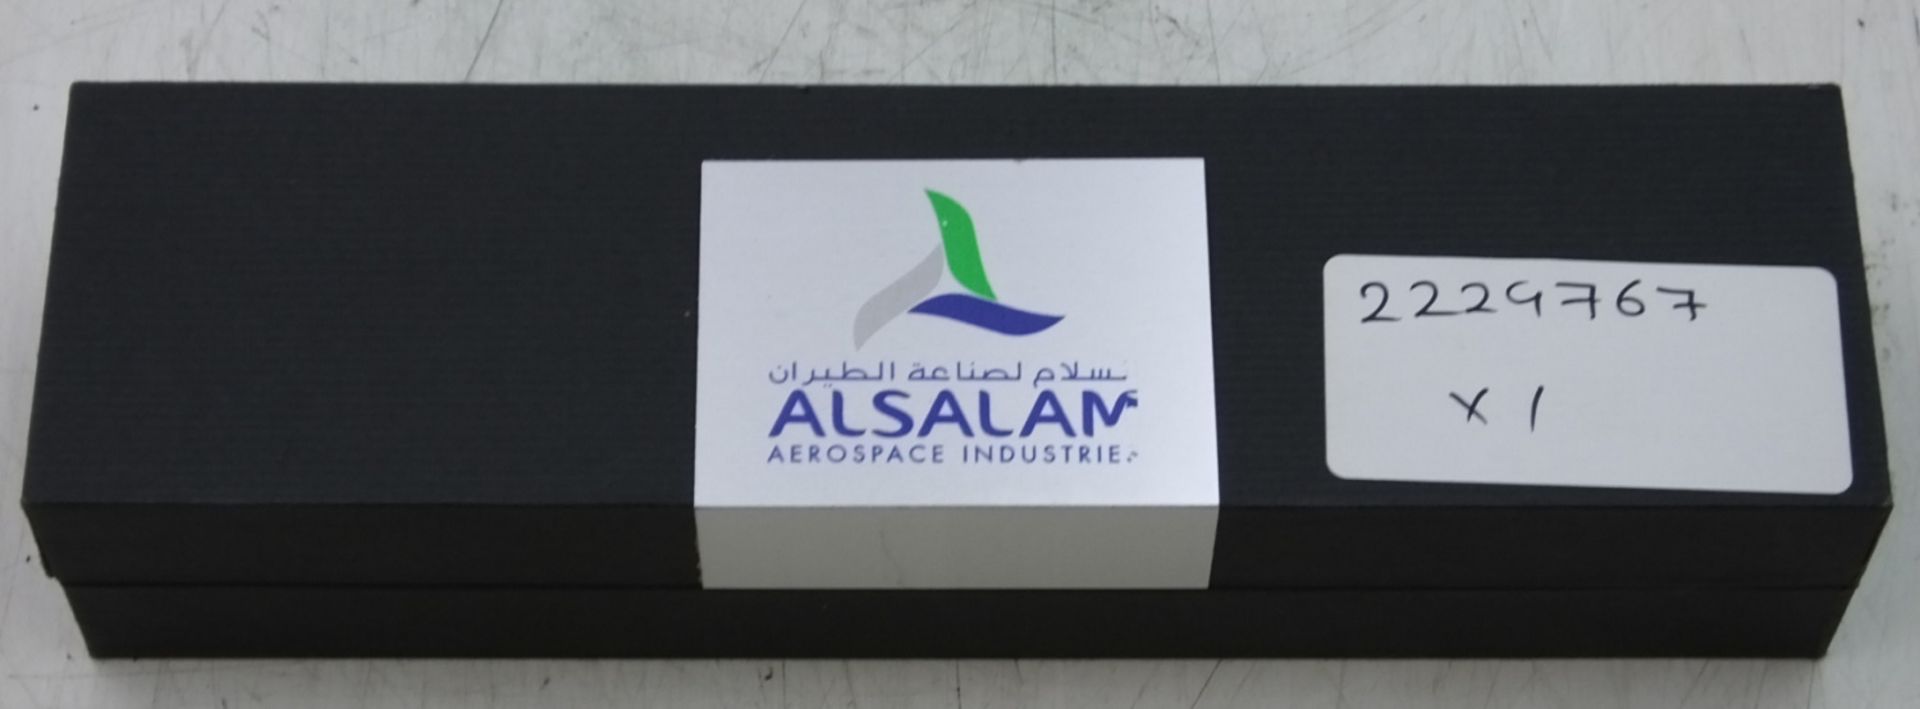 Alsalam Aerospace Industries Presentation Pen Set - Image 2 of 2